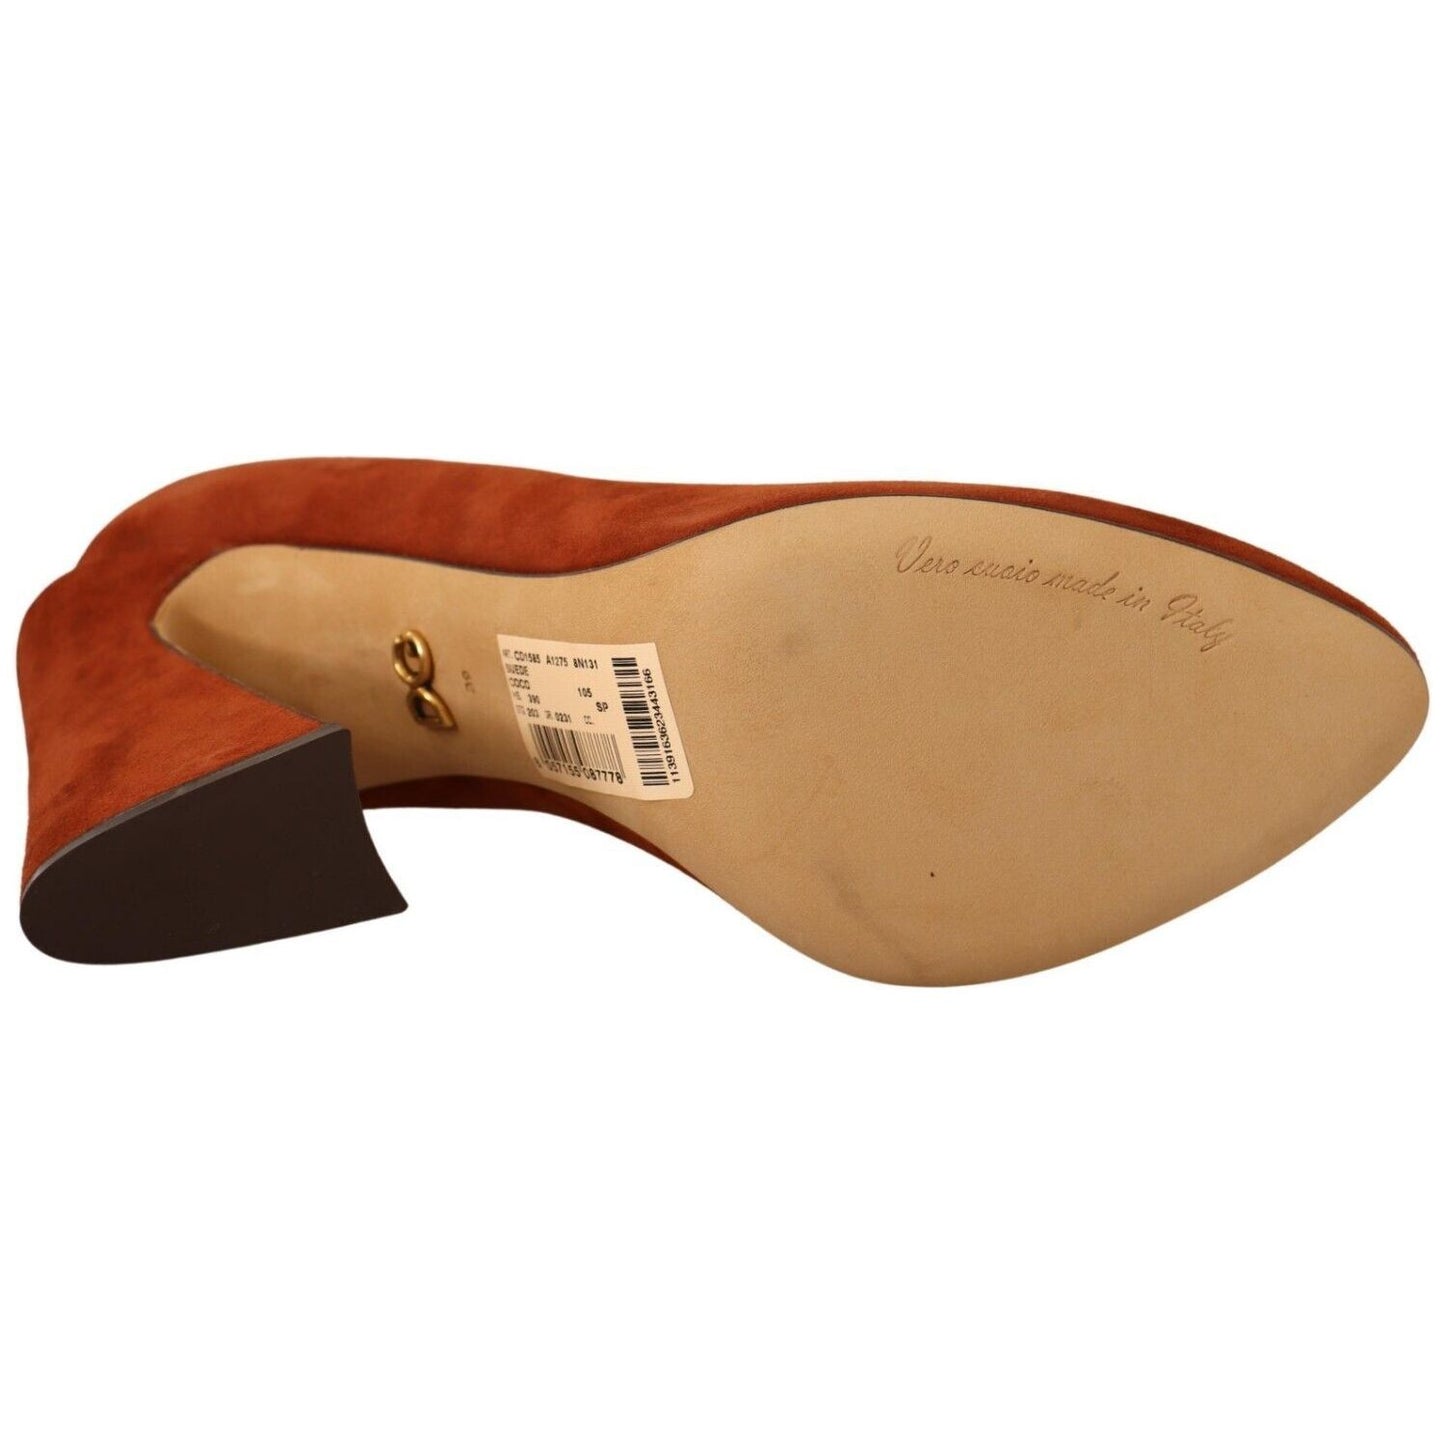 Dolce & Gabbana Elegant Cognac Suede Pumps brown-suede-leather-block-heels-pumps-shoes s-l1600-5-19-c91b7aa9-2a2.jpg